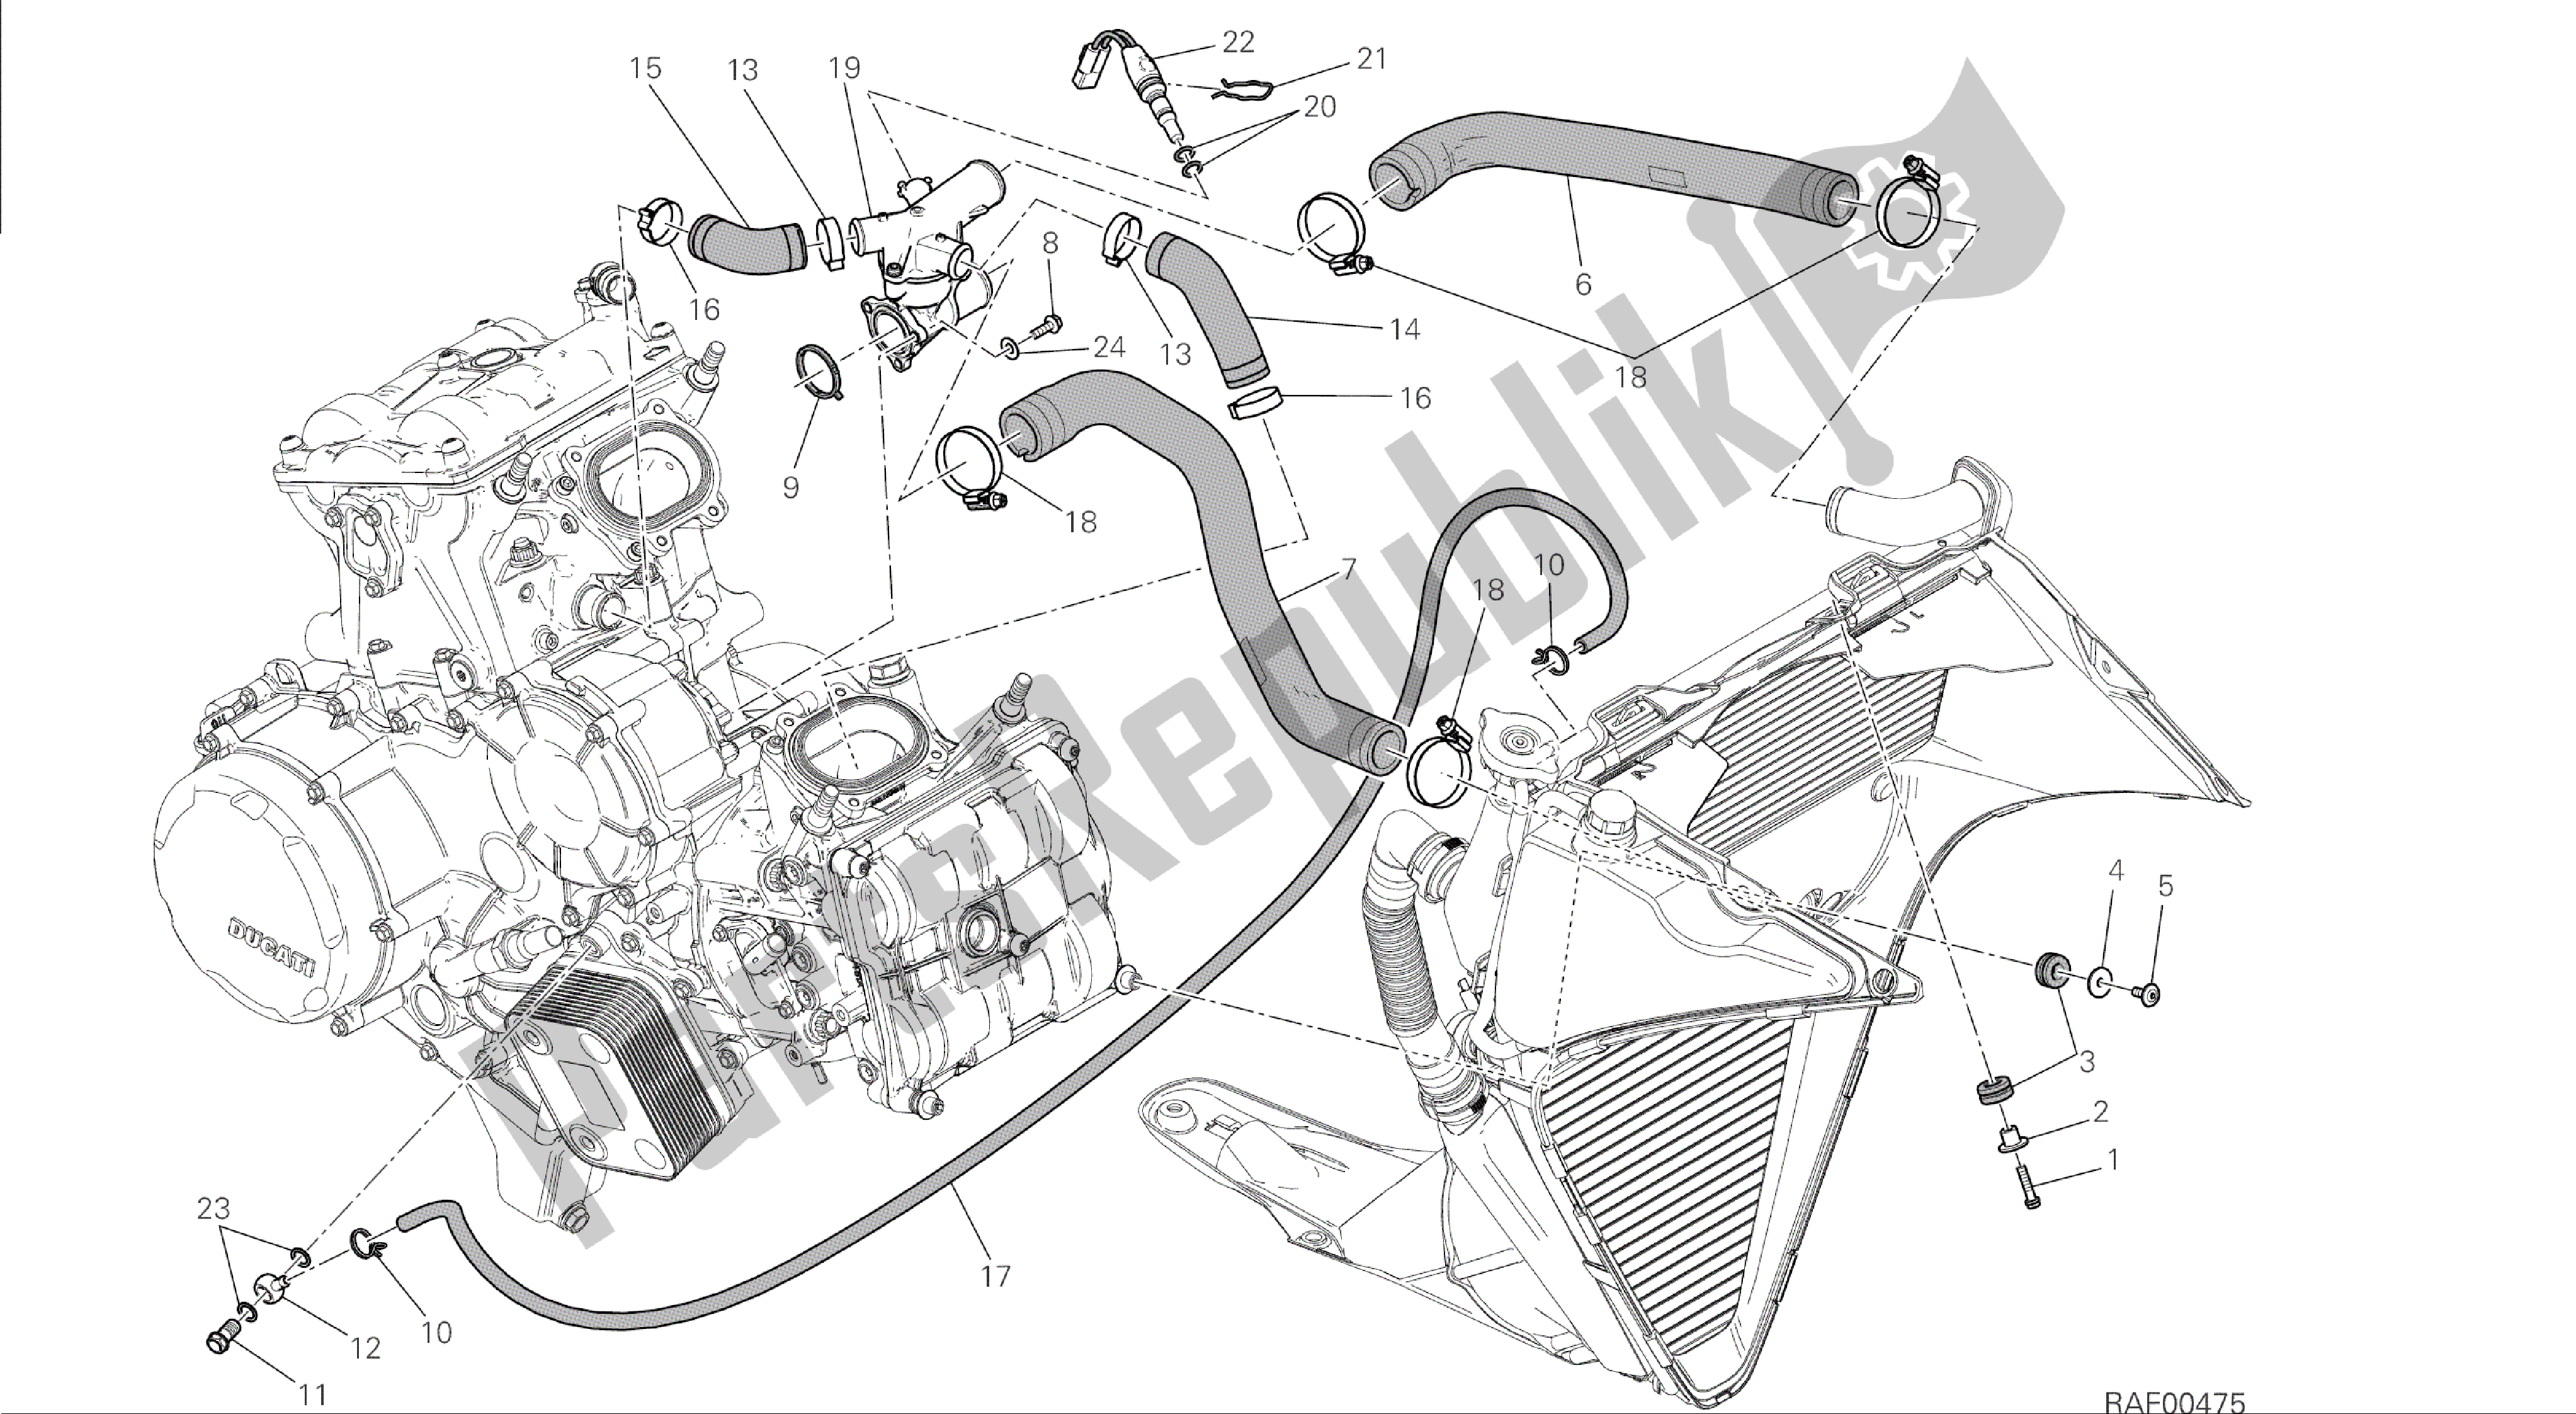 Todas las partes para Dibujo 031 - Sistema De Enfriamiento [mod: 1199 Abs; Xst: Marco De Grupo Aus, Bra, Chn, Eur, Fra, Jap] de Ducati Panigale ABS 1199 2014